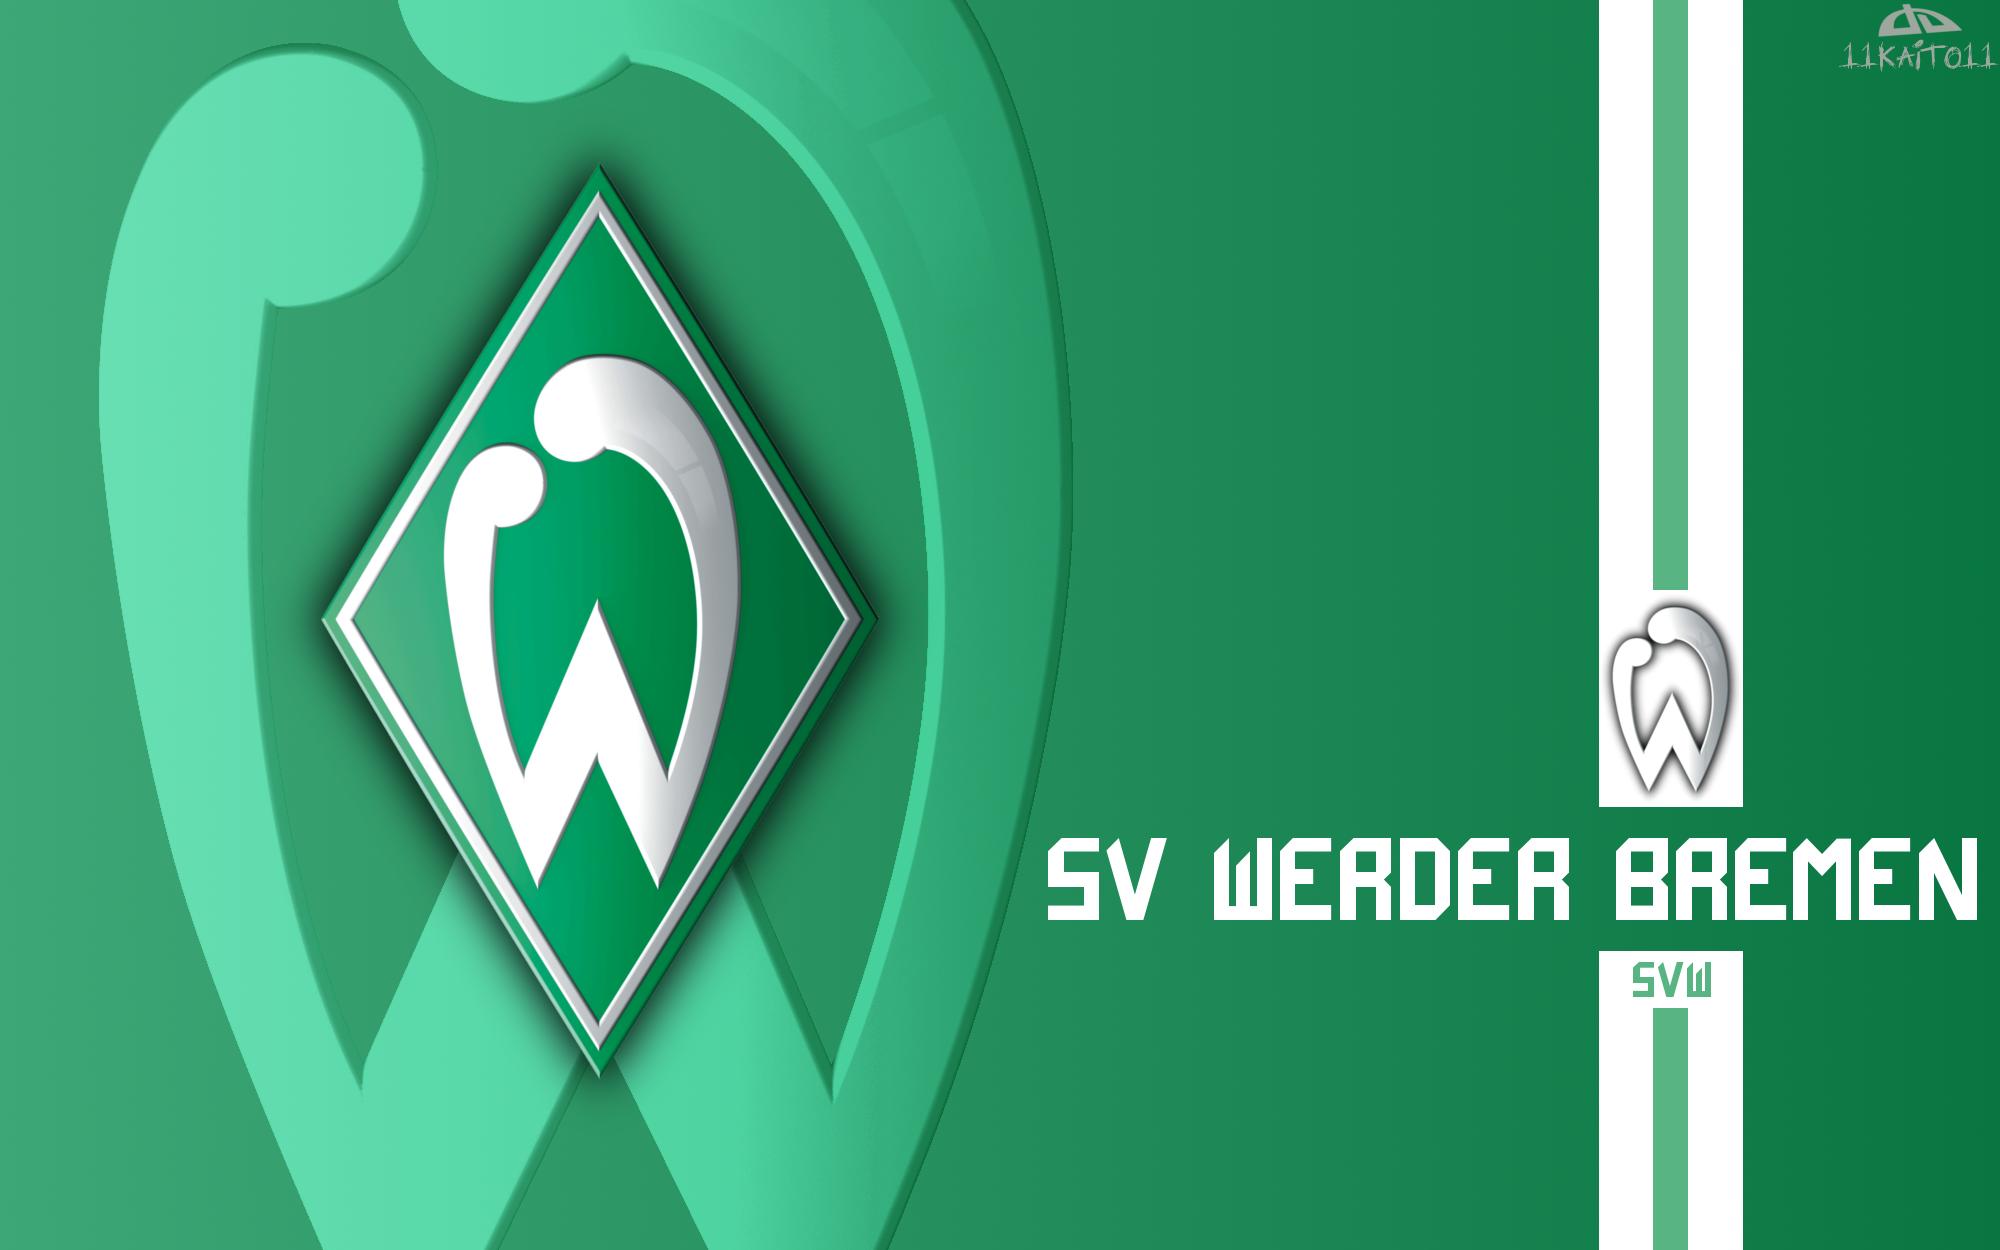 Werder Bremen Football Wallpaper